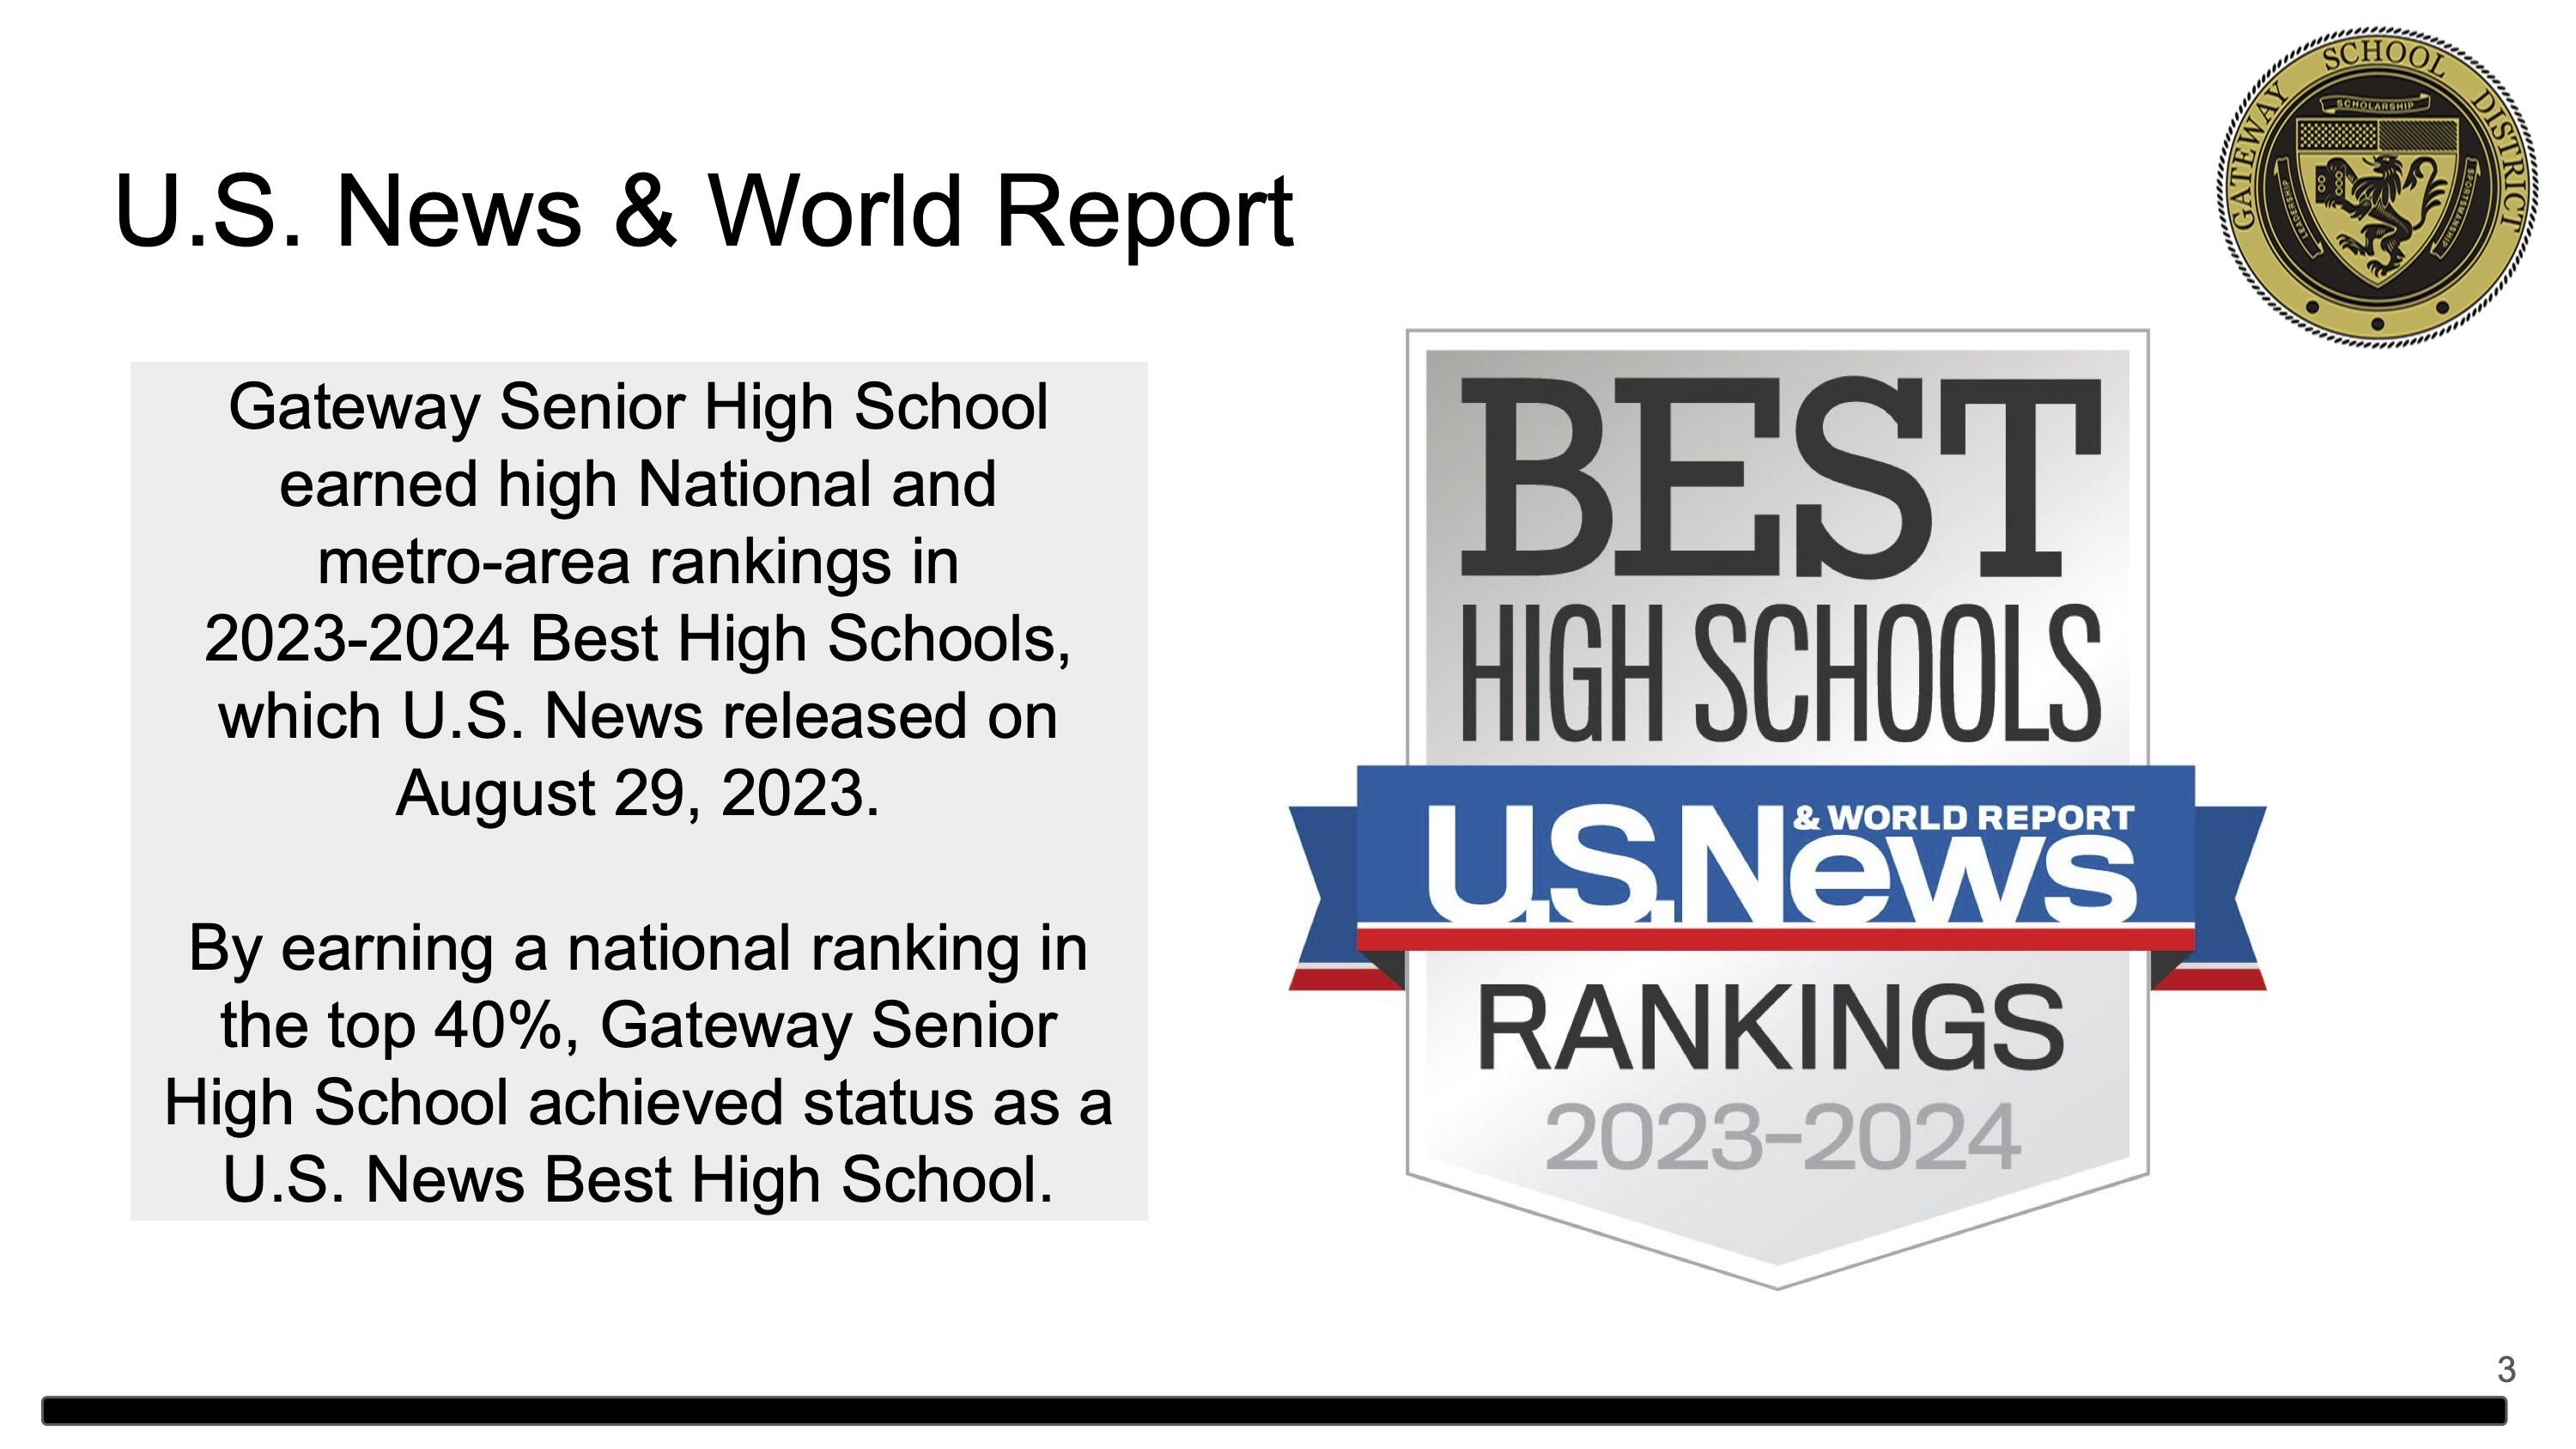 U.S. News & World Report ranking